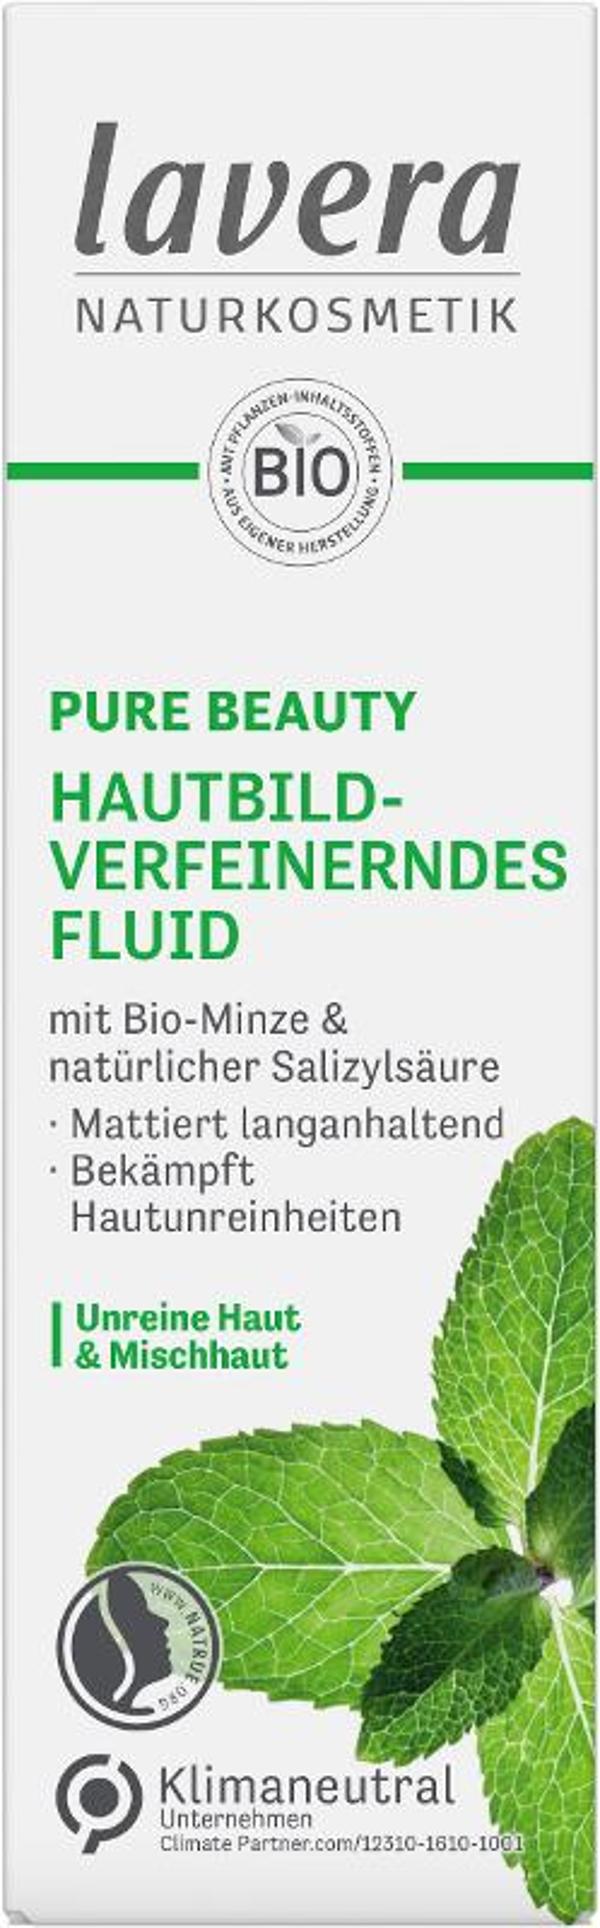 Produktfoto zu Lavera Hautbildverfeinerndes Fluid Pure Beauty 50ml